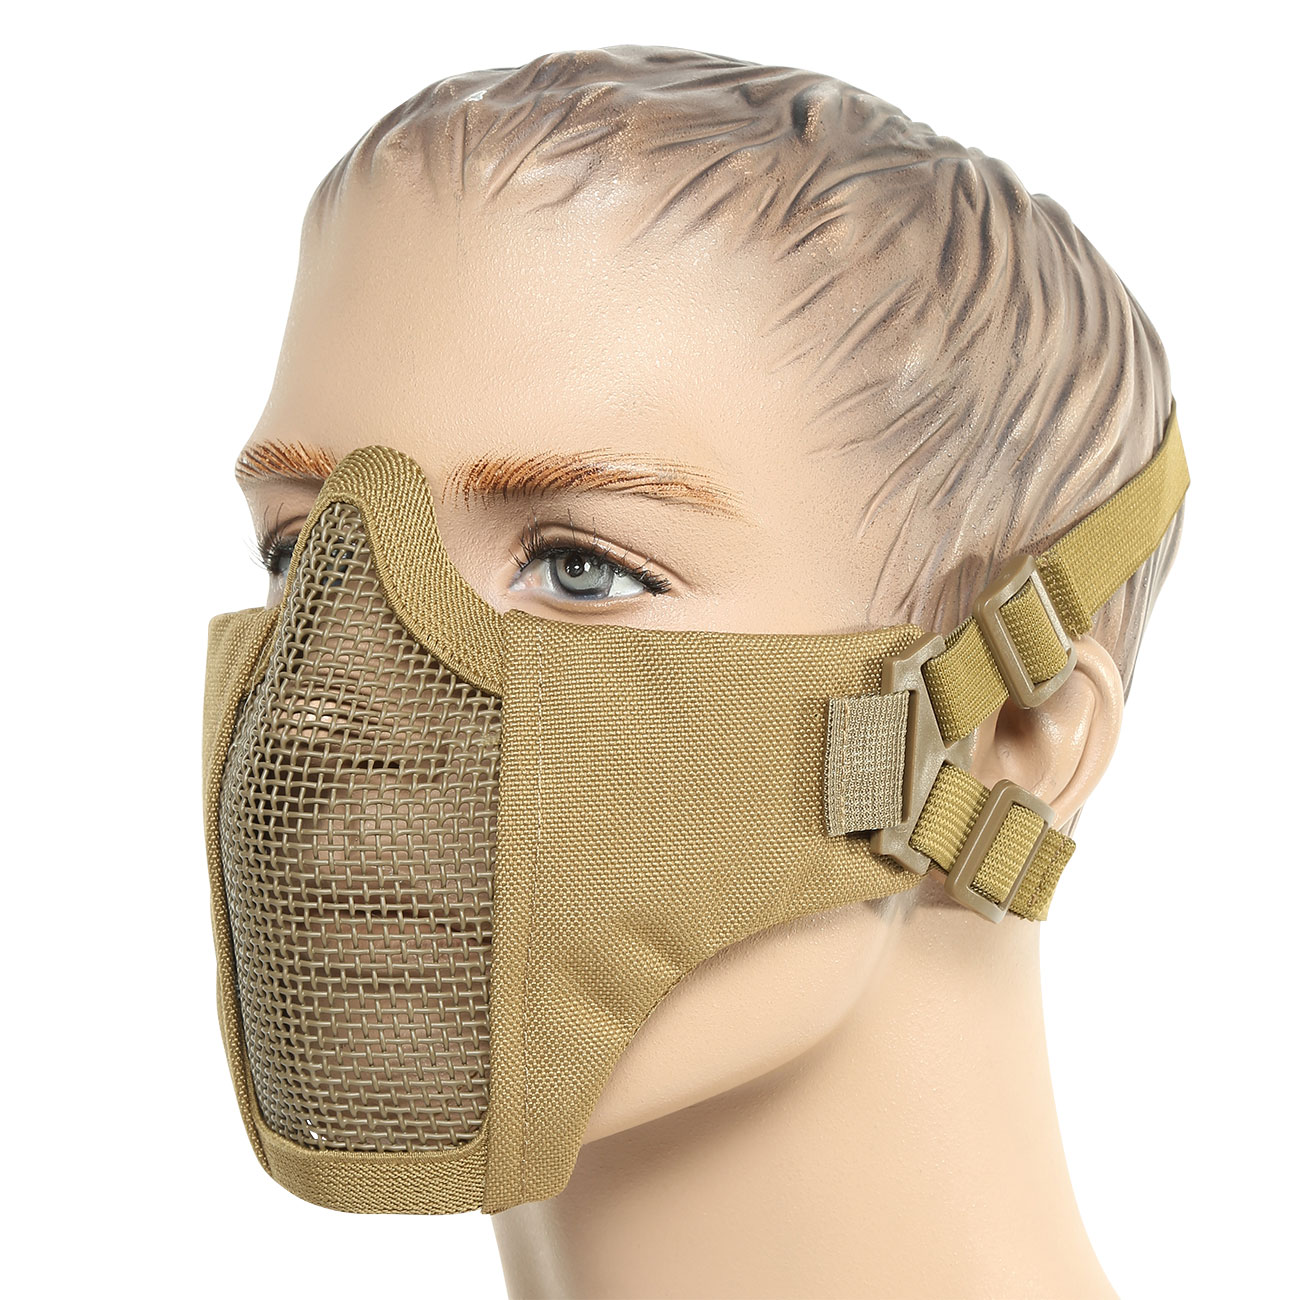 ASG Strike Systems Mesh Mask Airsoft Gittermaske Lower Face tan